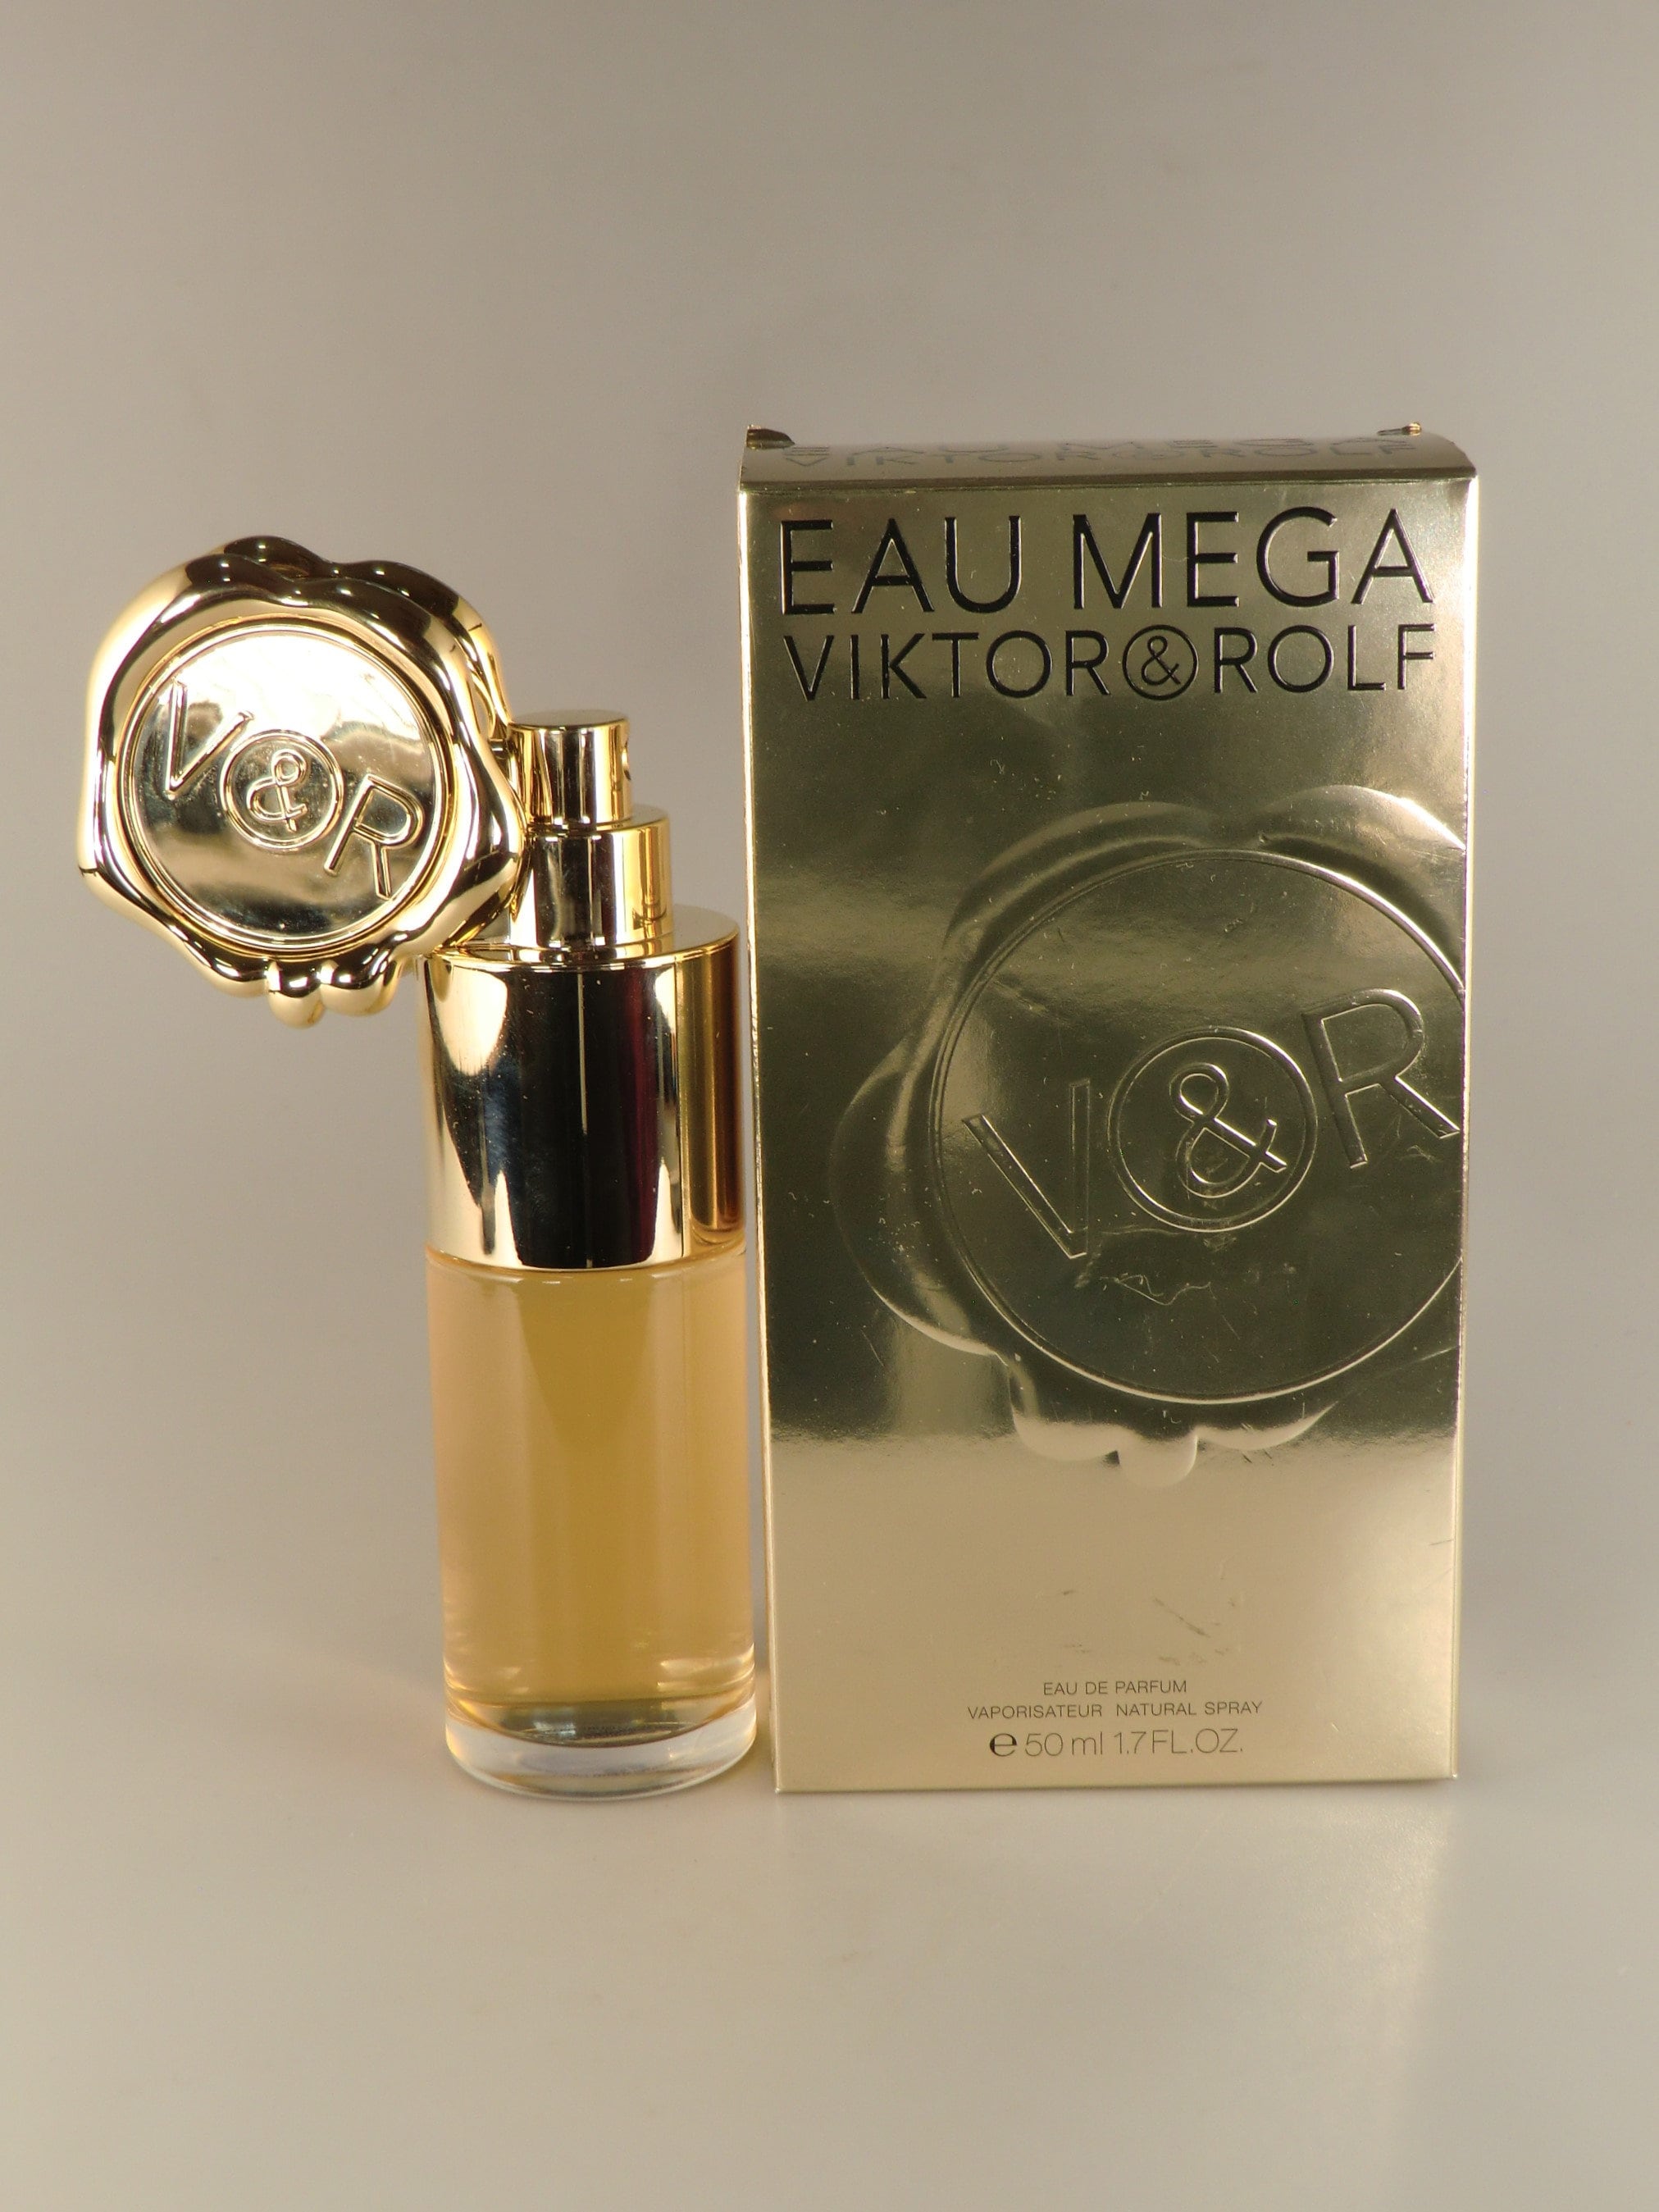 Buy Viktor Rolf Eau Mega Eau De Parfum 1.7FL.OZ / 50ml Online in India 